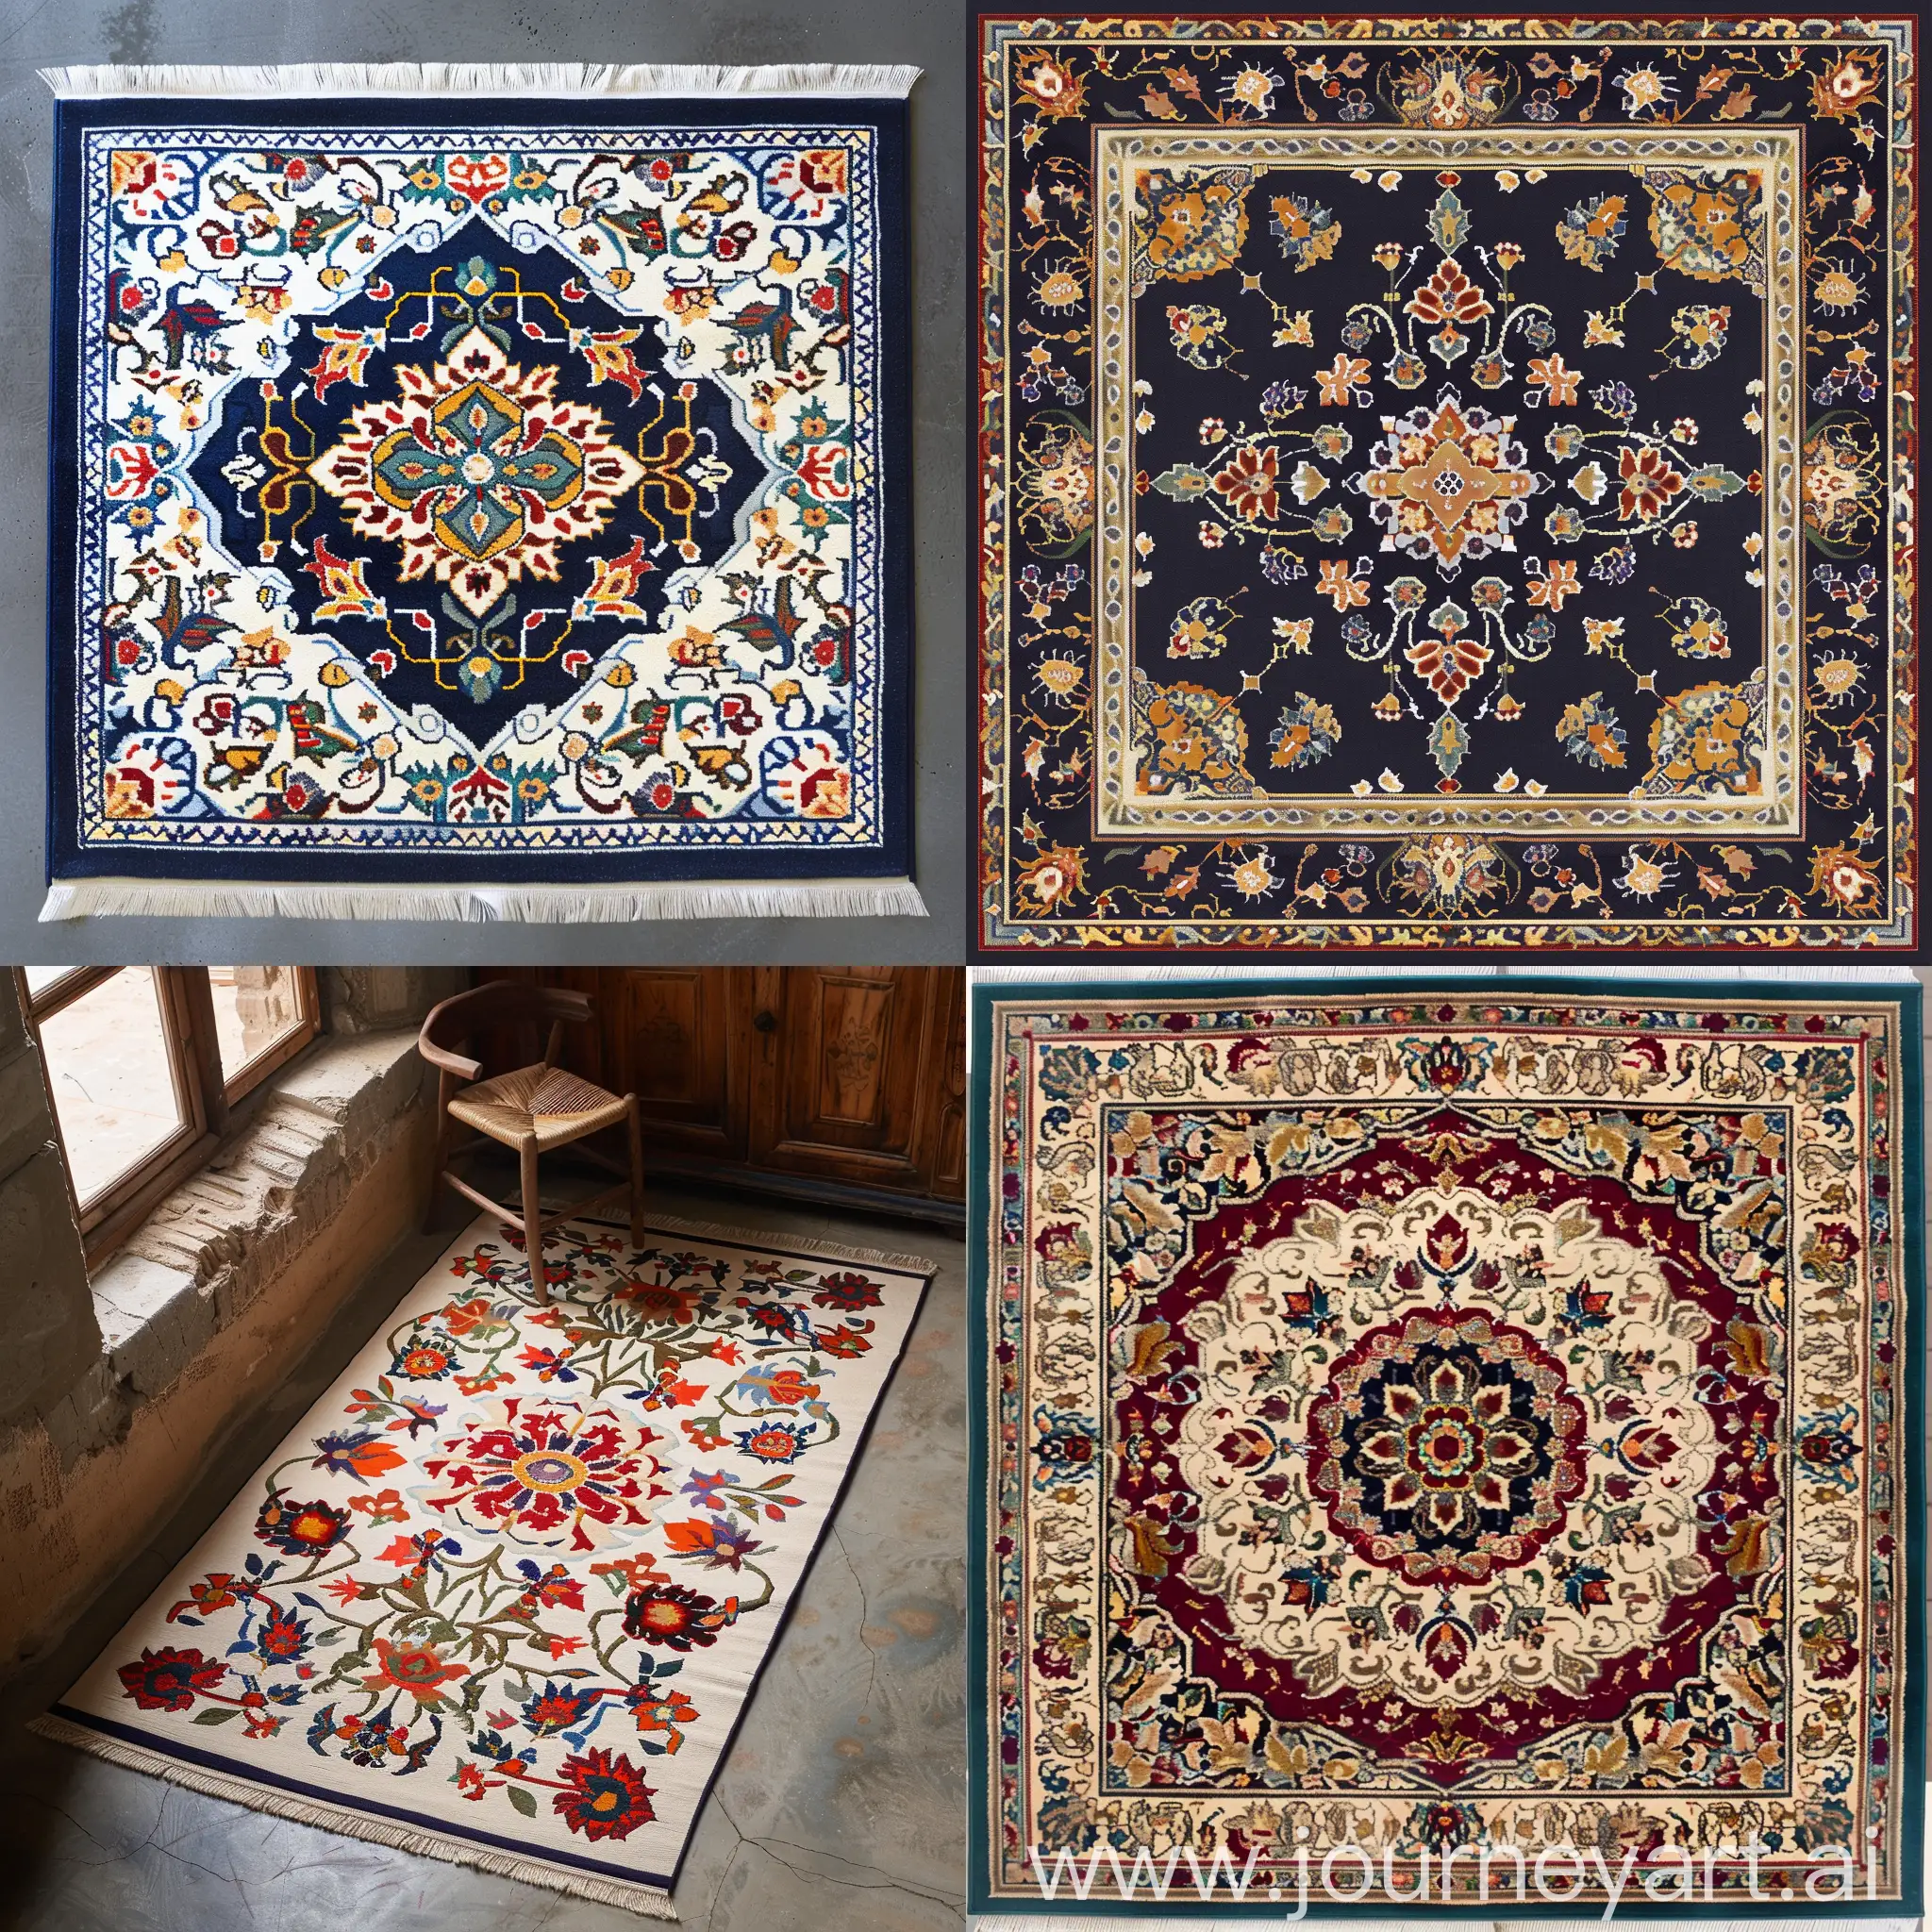 Arabesque-MachineMade-Carpet-Design-with-Intricate-Patterns